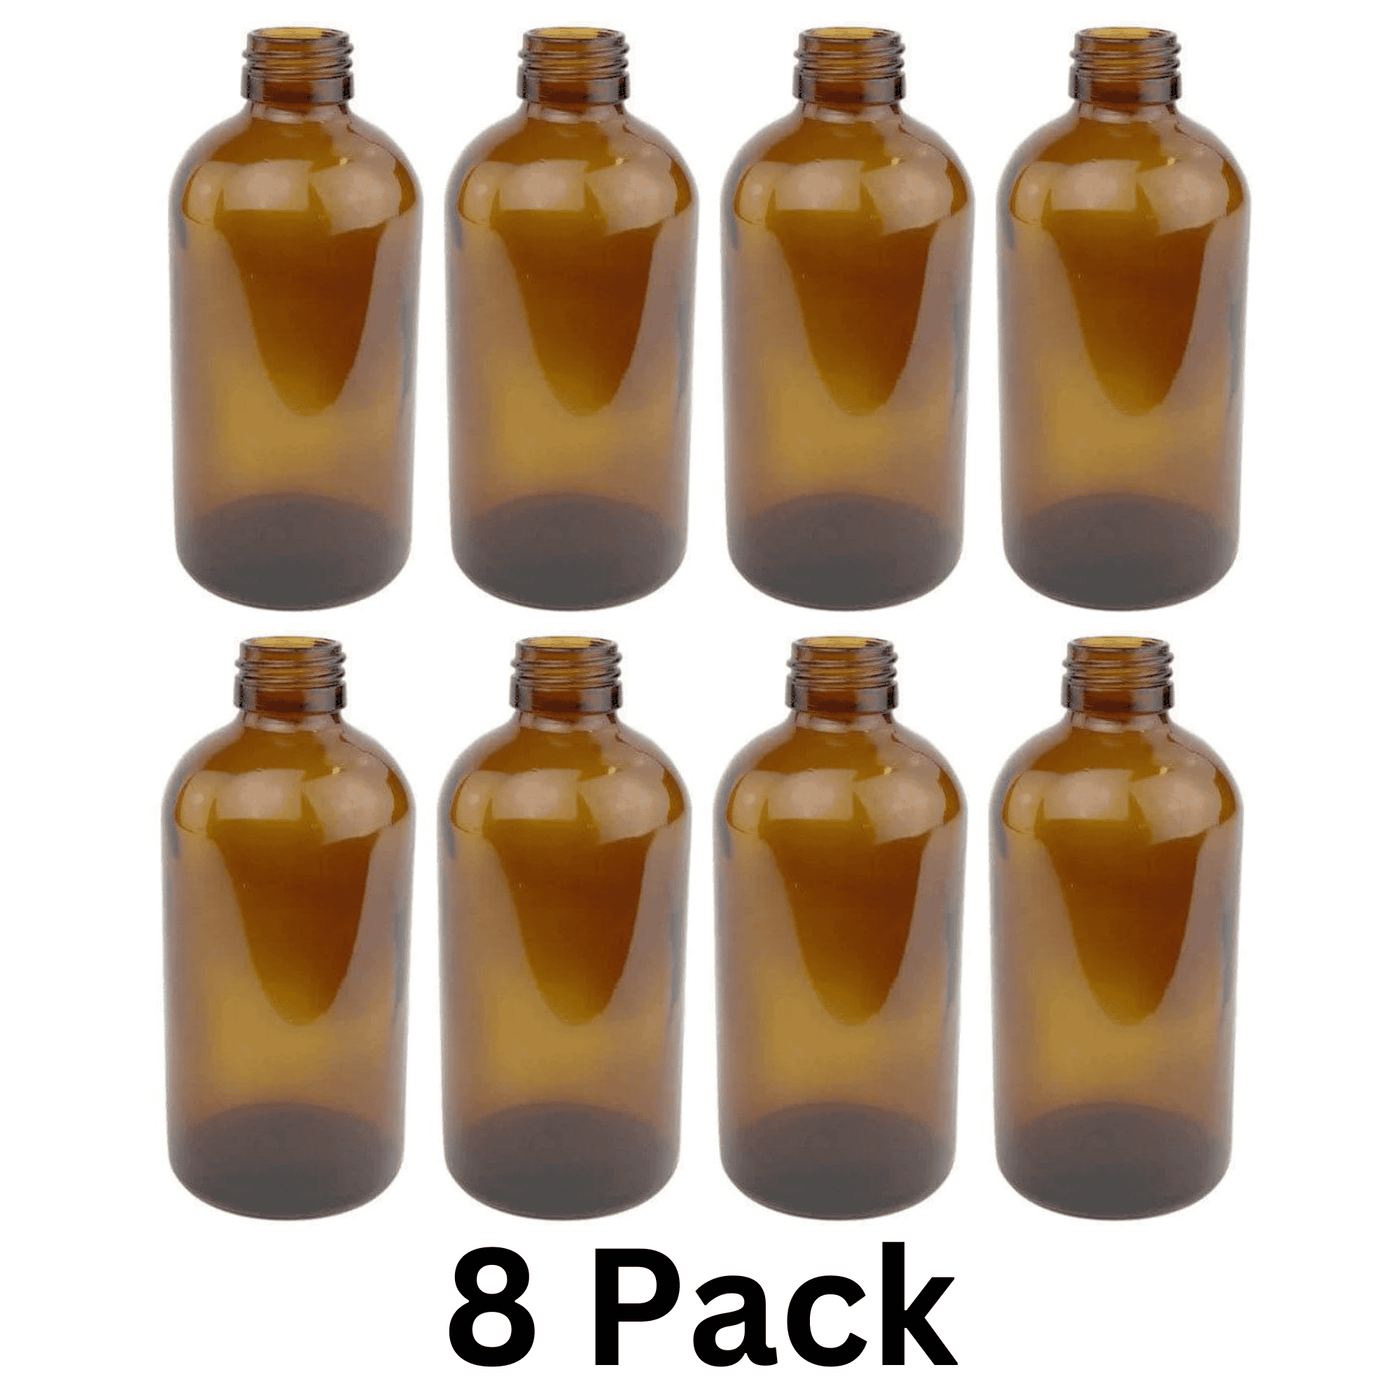 200ml Amber 'Boston' Style Glass Bottle - 8 Pack